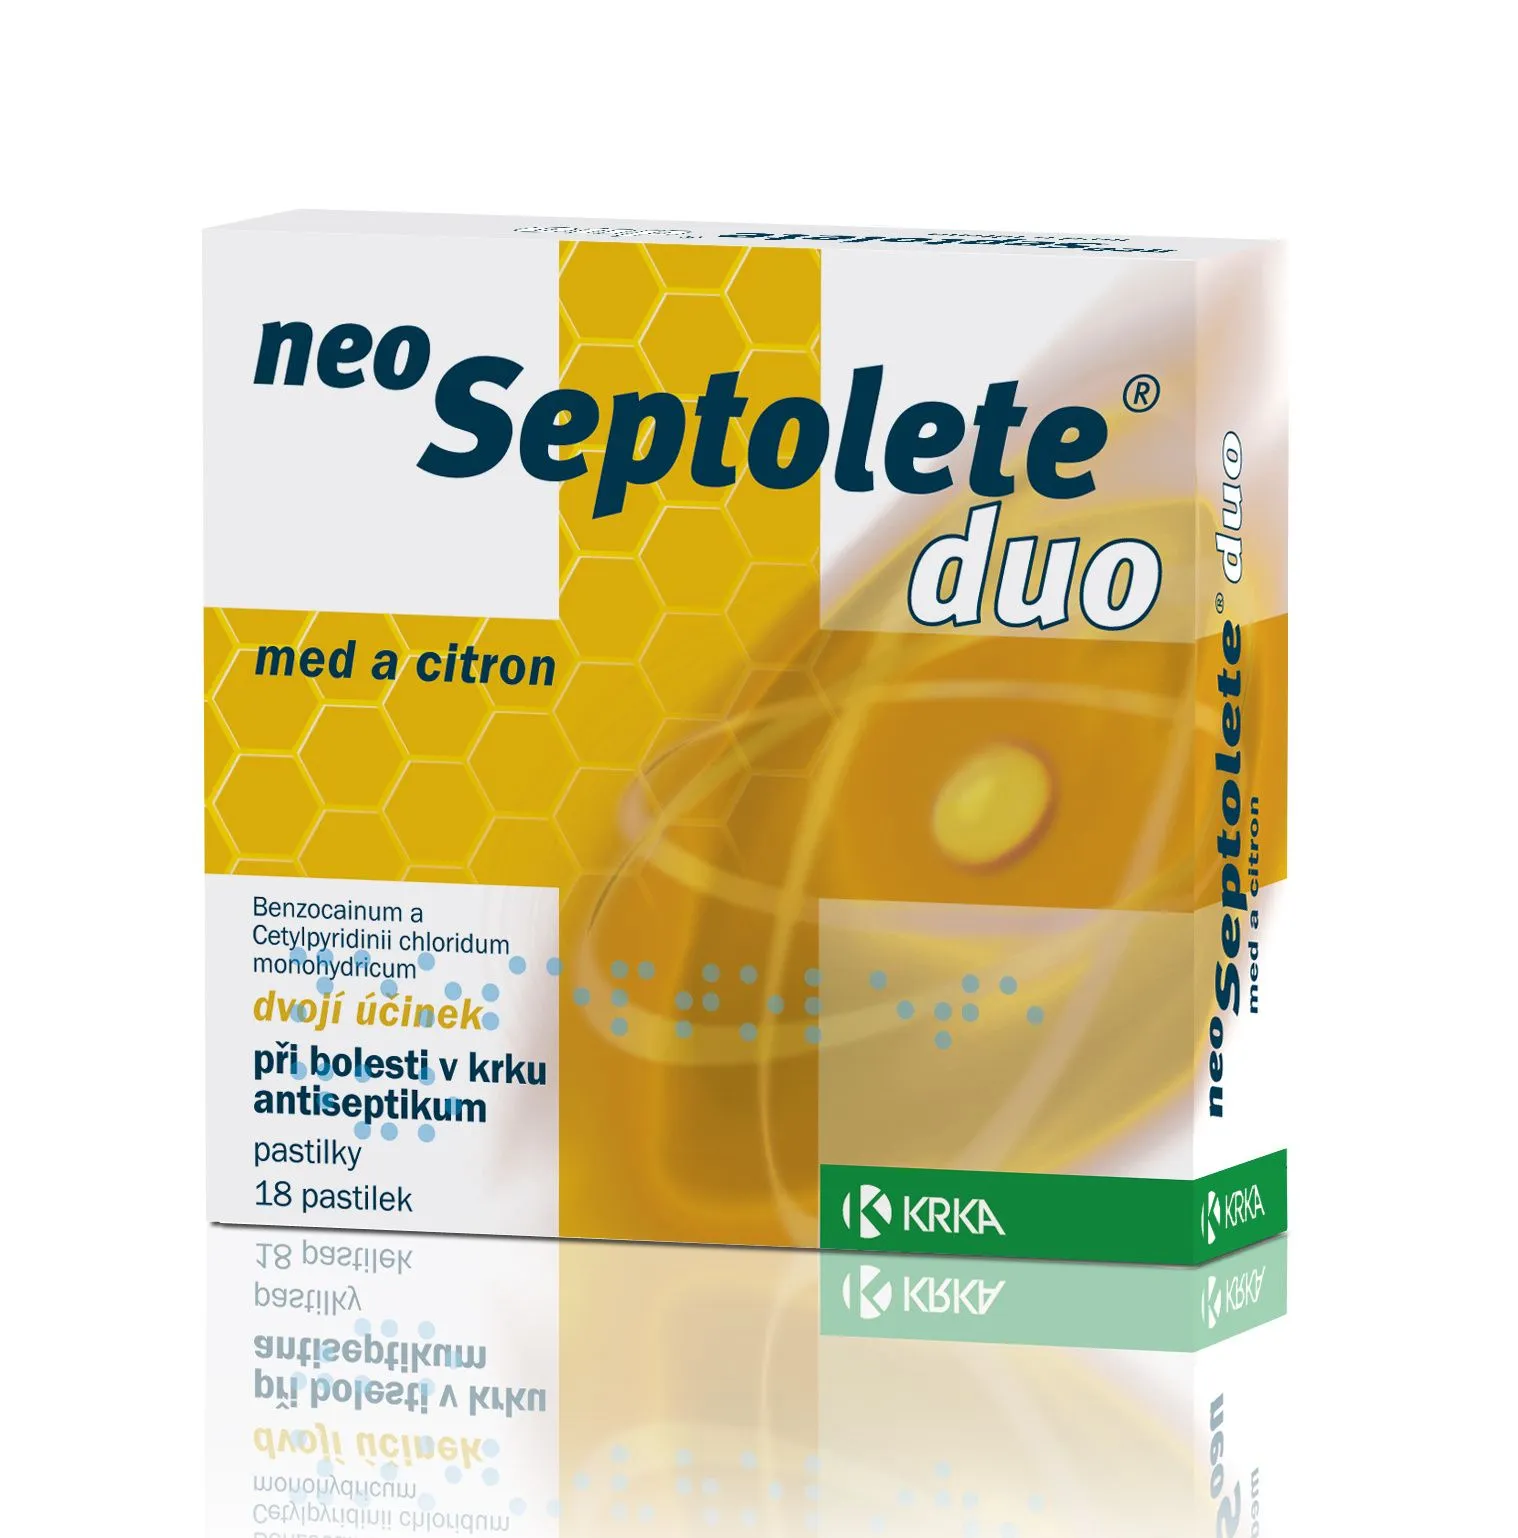 Neoseptolete Duo med a citron 18 pastilek